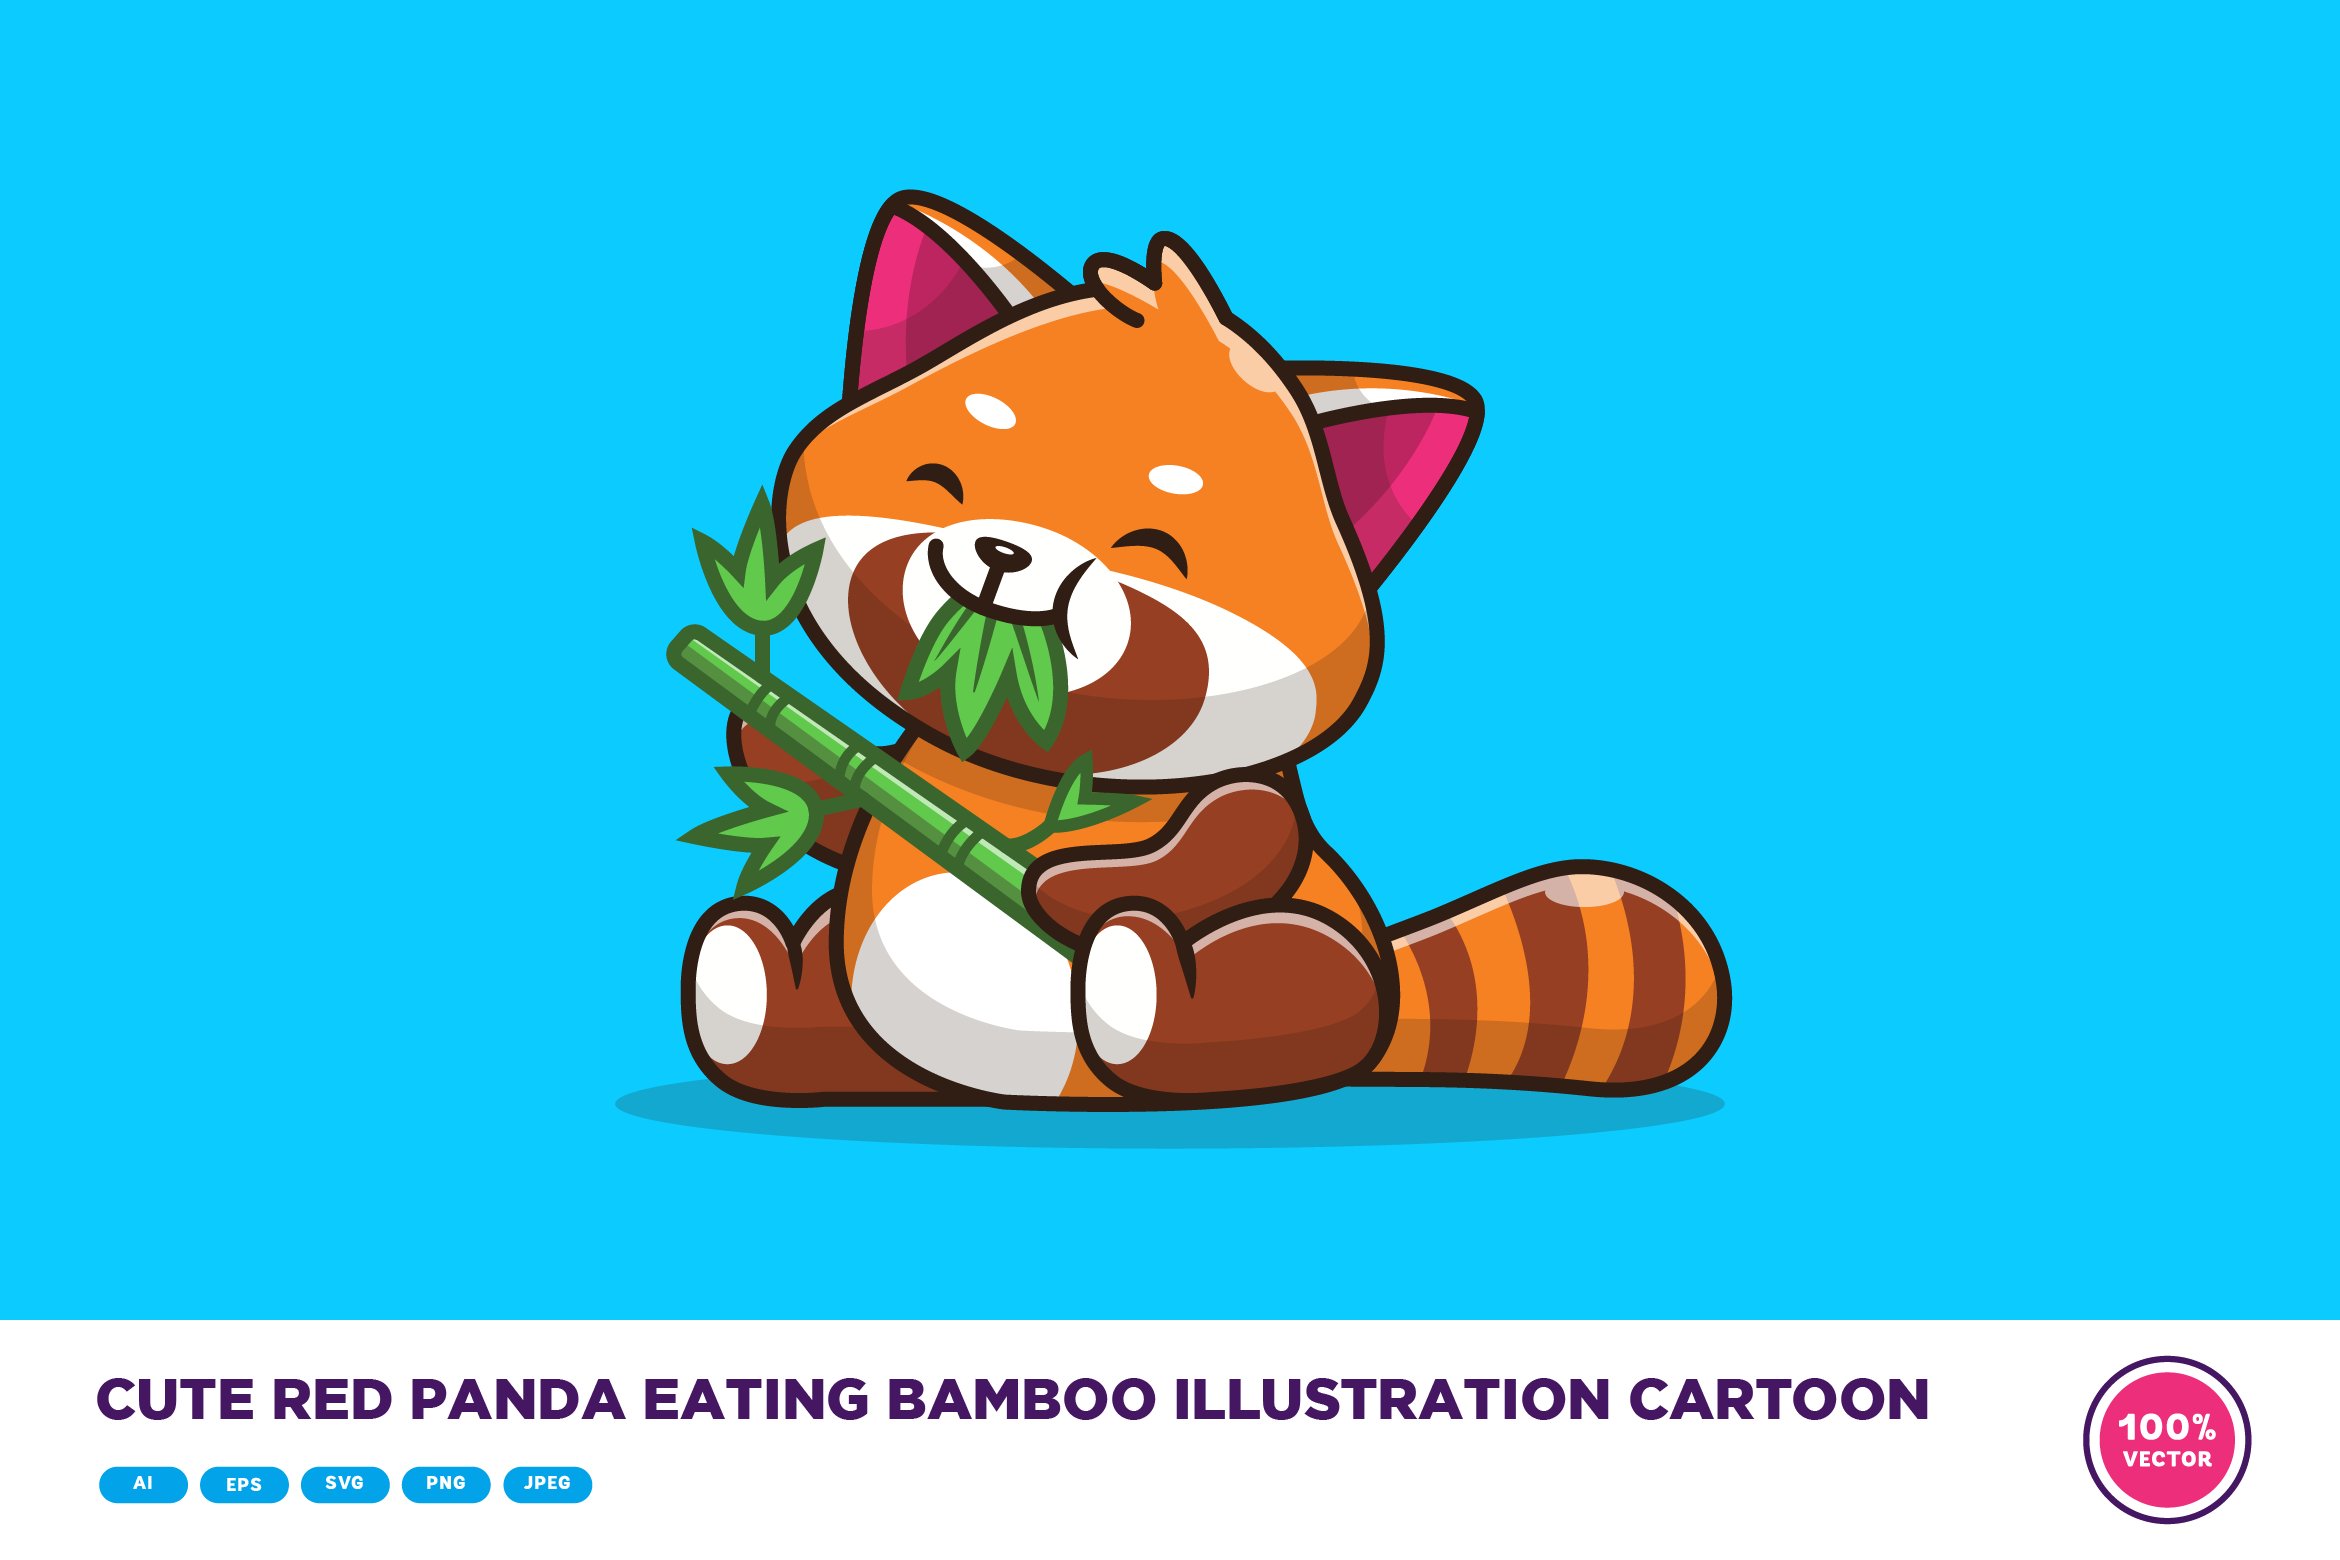 Cute Red Panda Eating Bamboo Cartoon cover image.